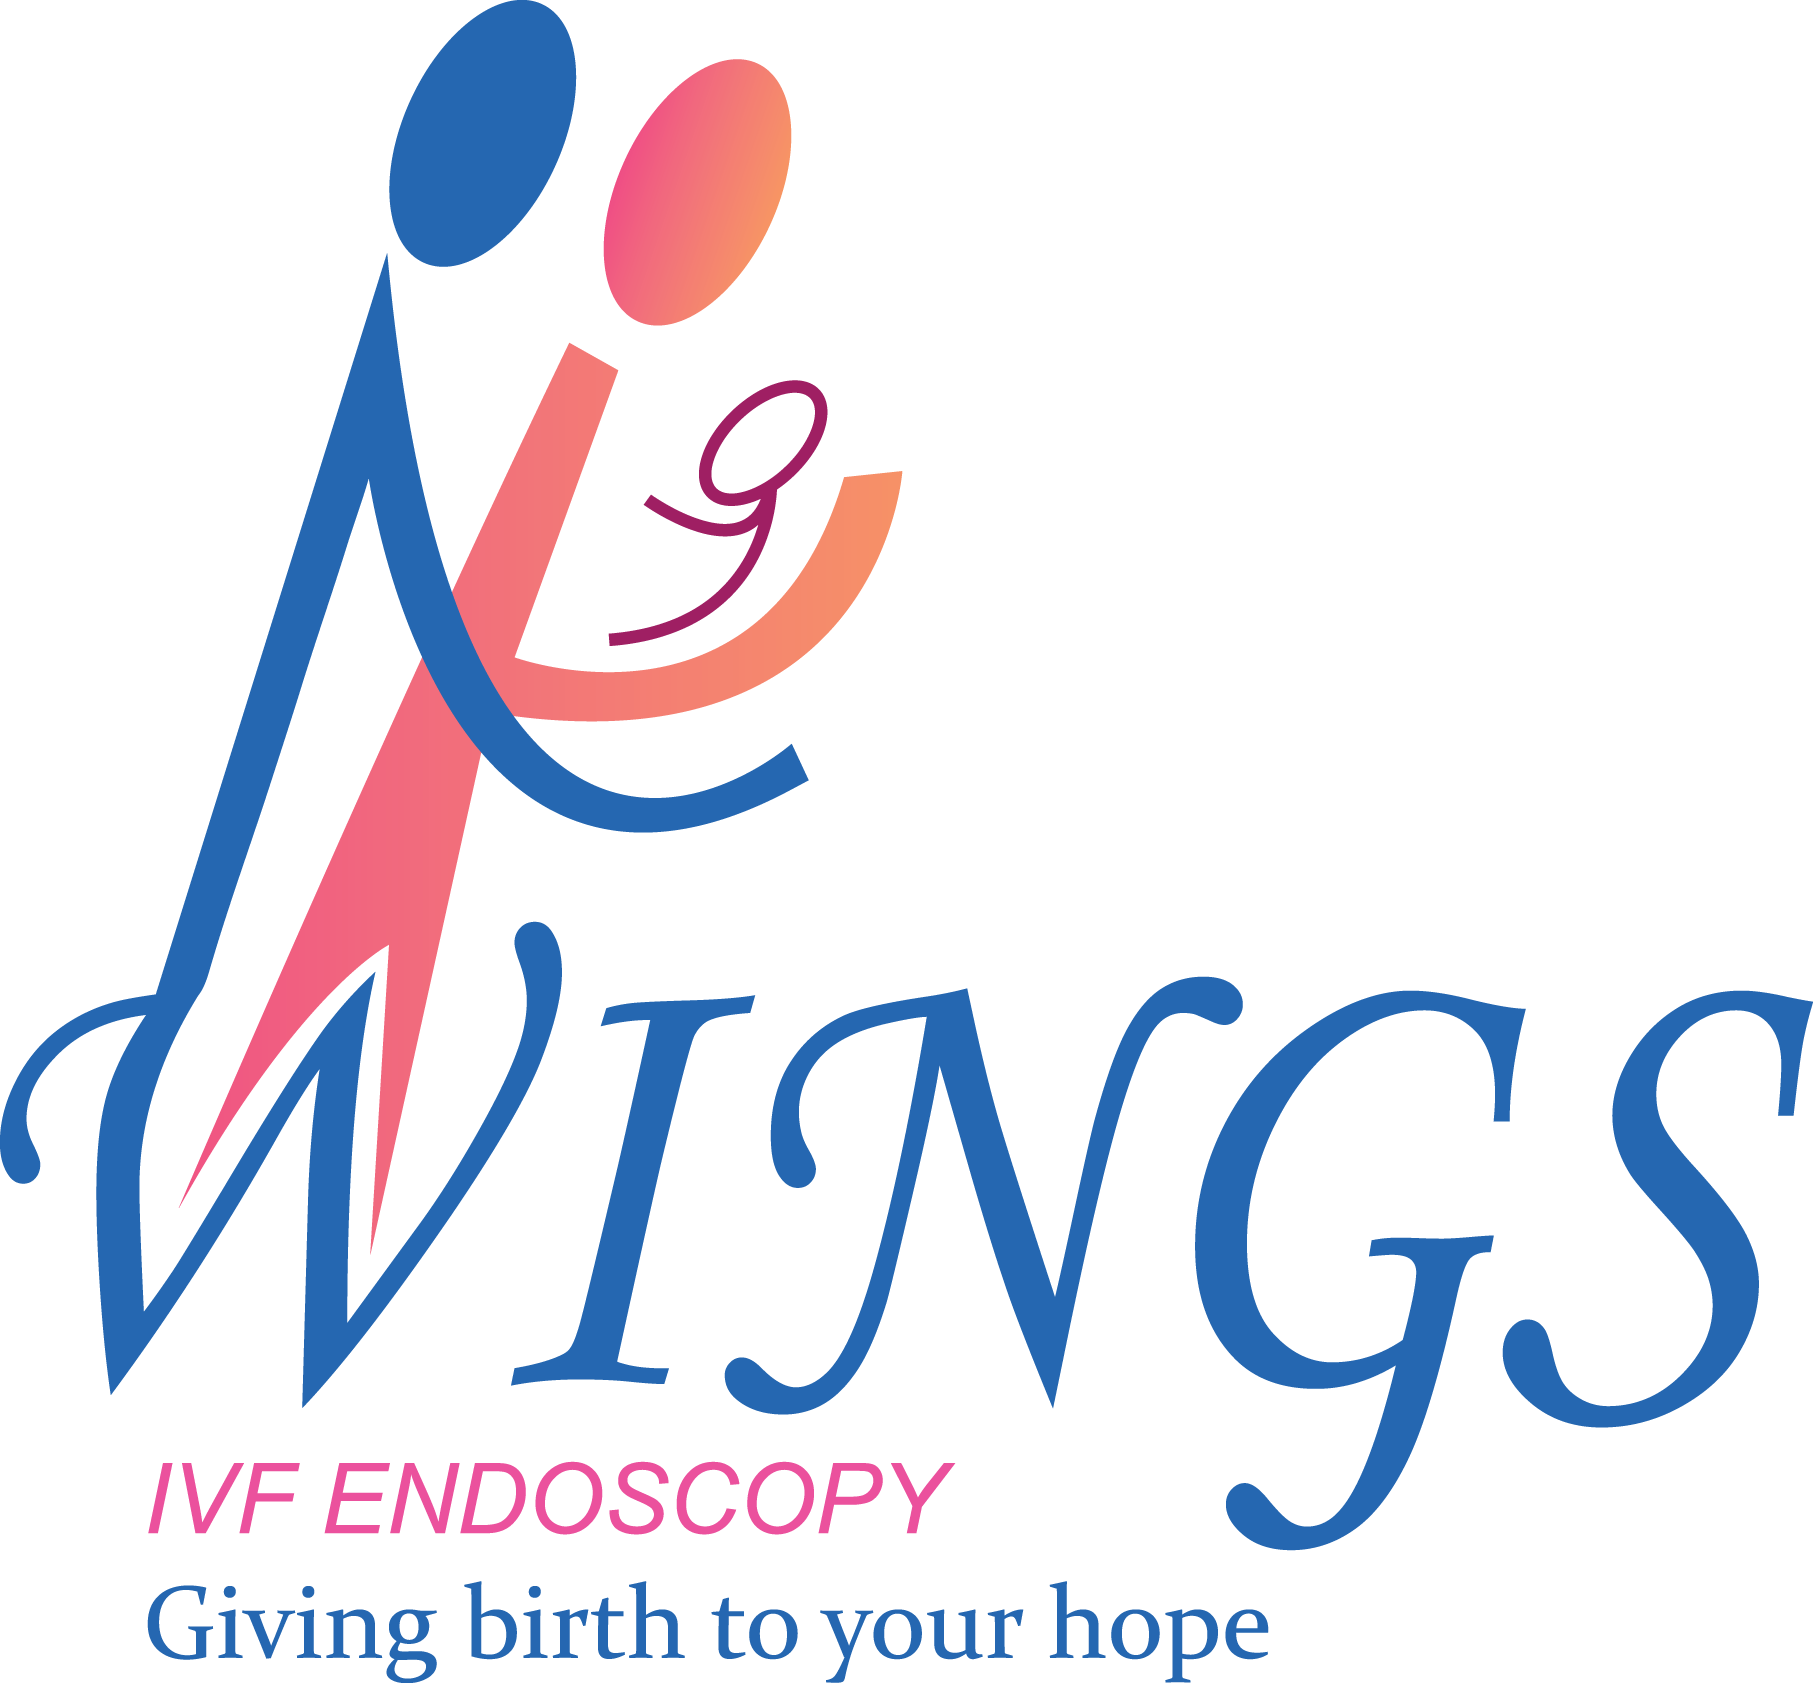 Wings Hospitals|Clinics|Medical Services